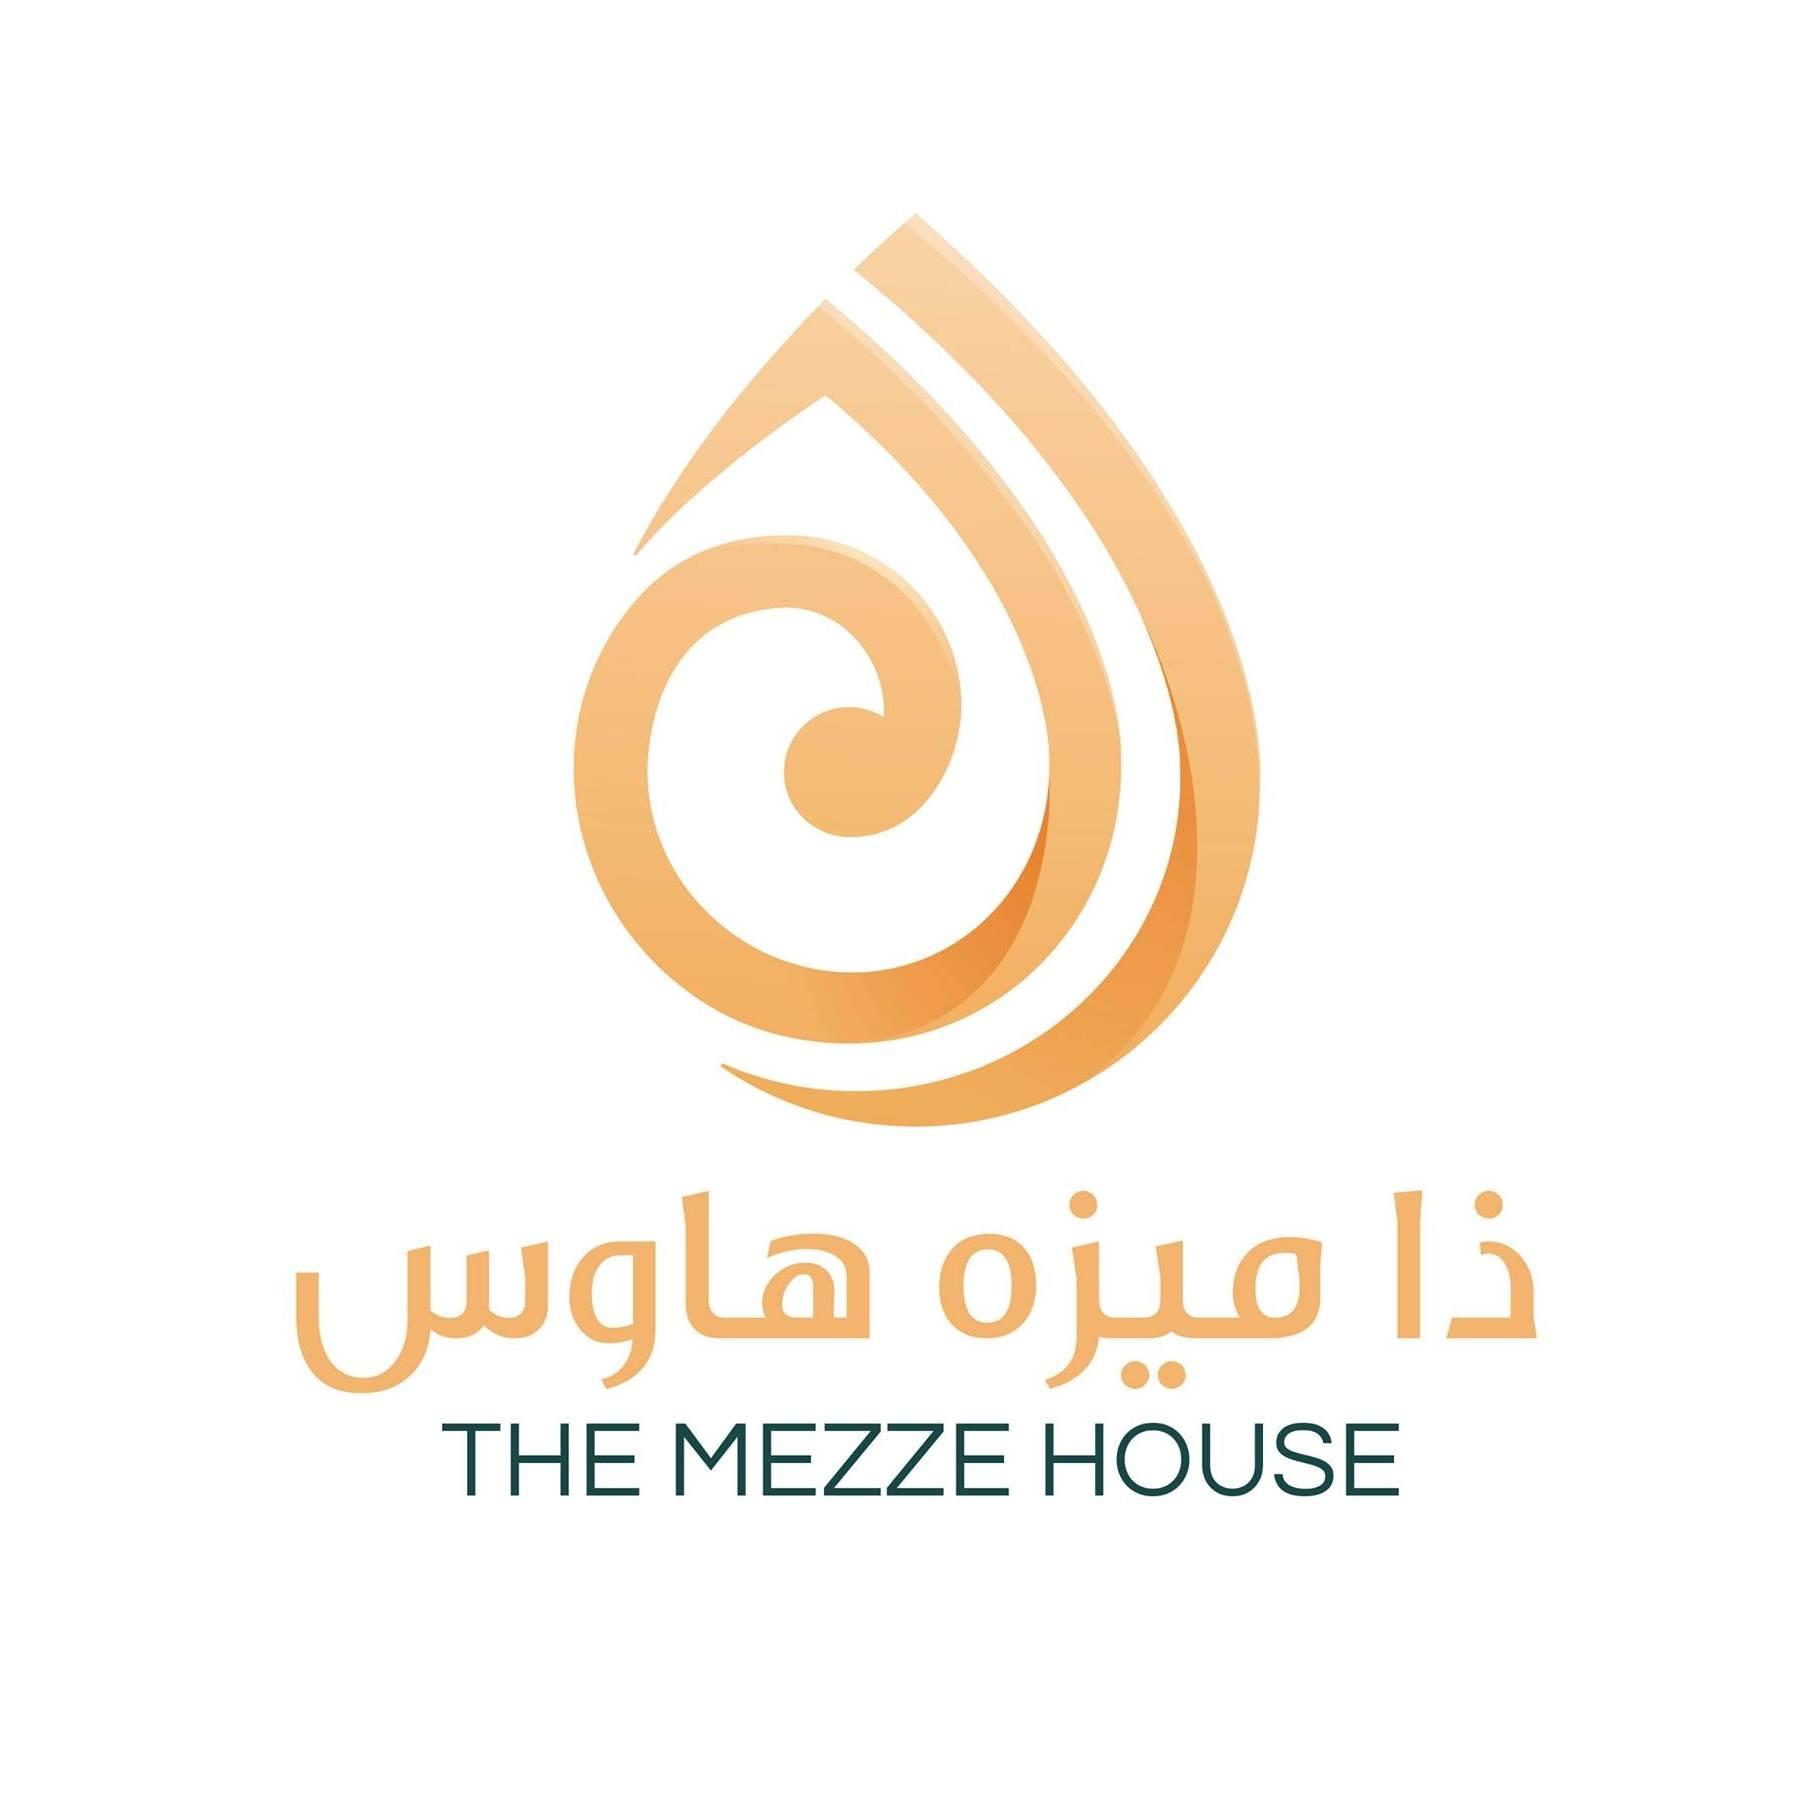 The Mezze House